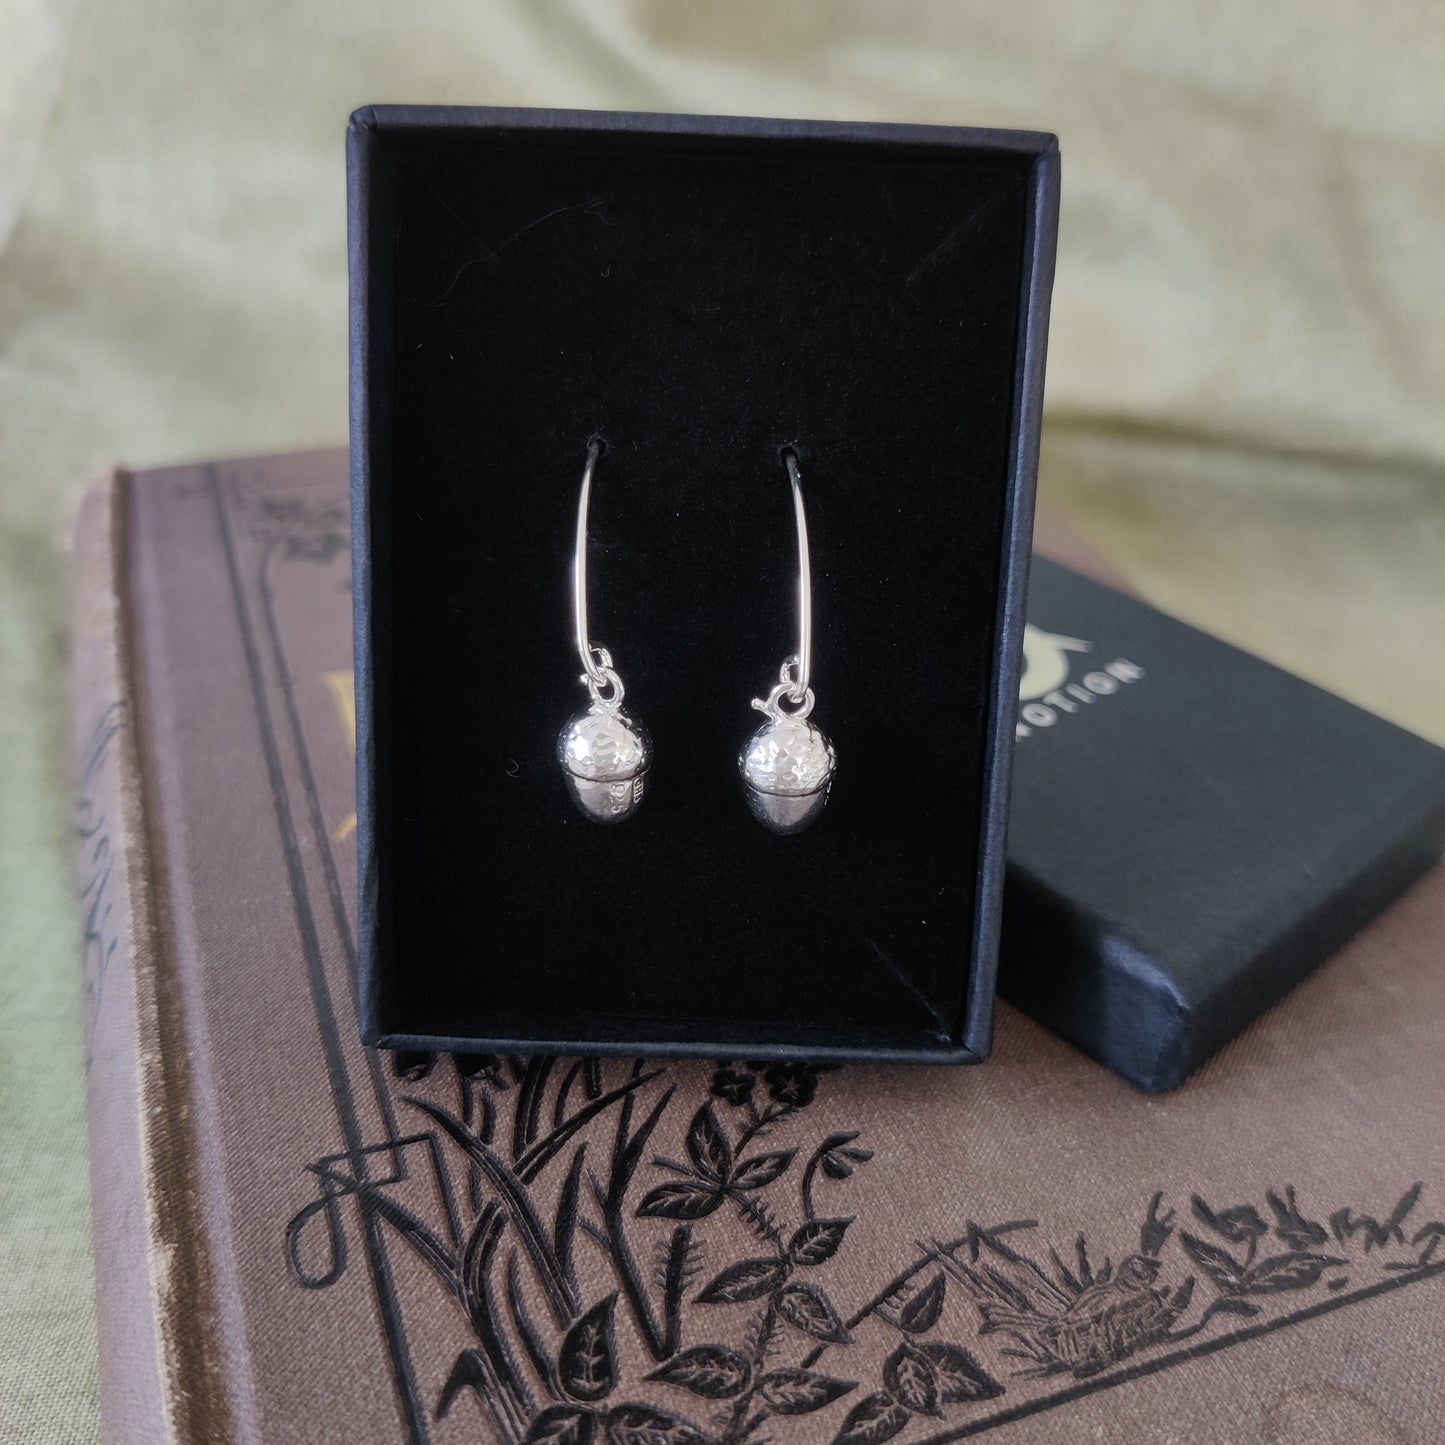 acorn earrings handcrafted in 925 sterling silver by Notion Jewellery